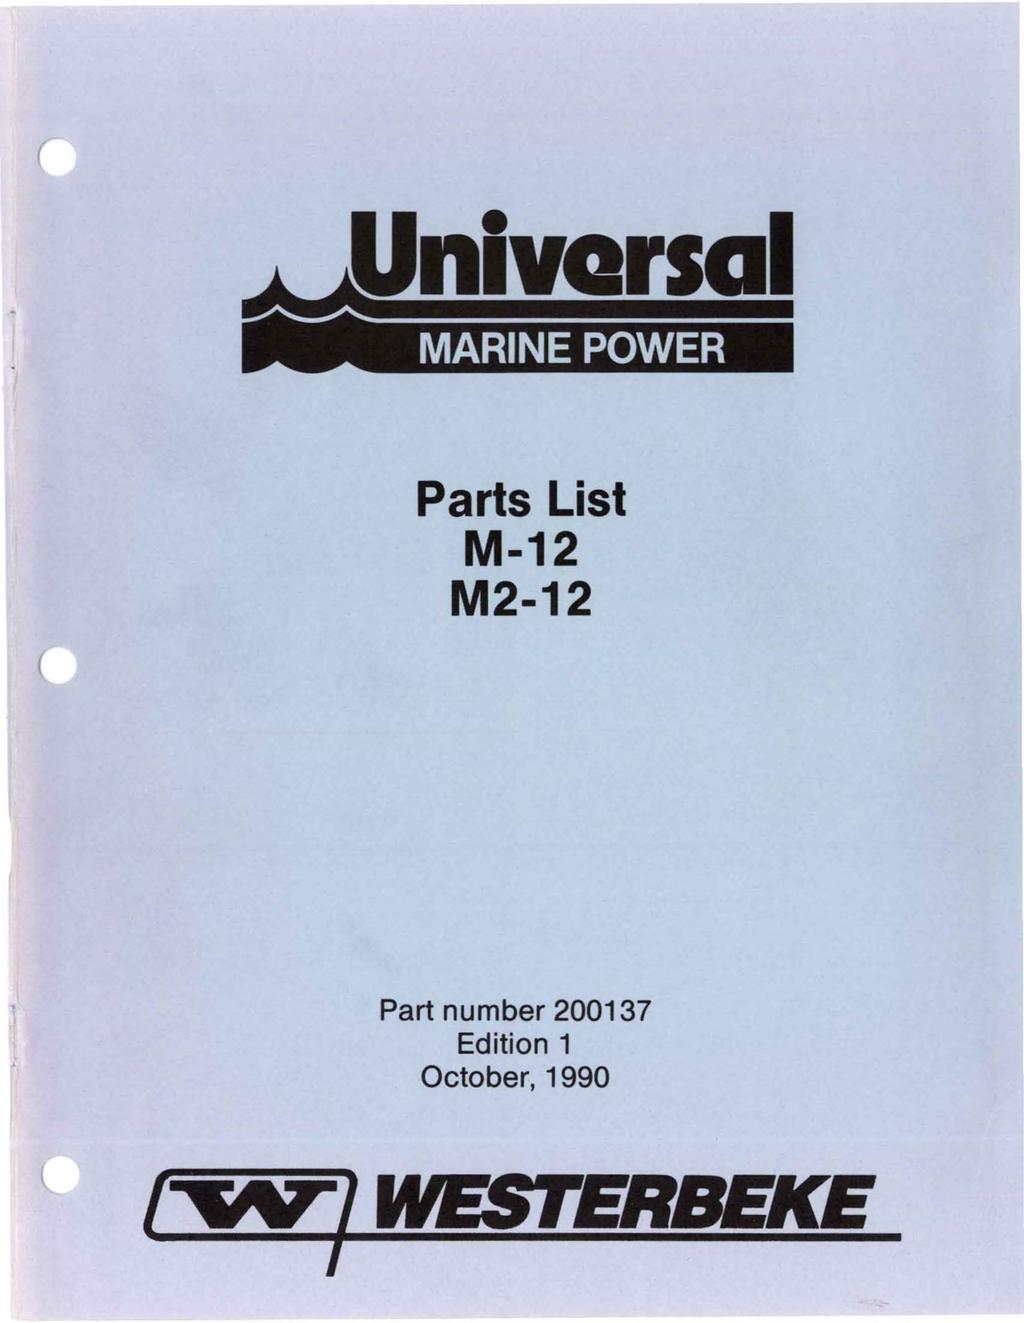 nivarsal Parts List M-12 M2-12 Part